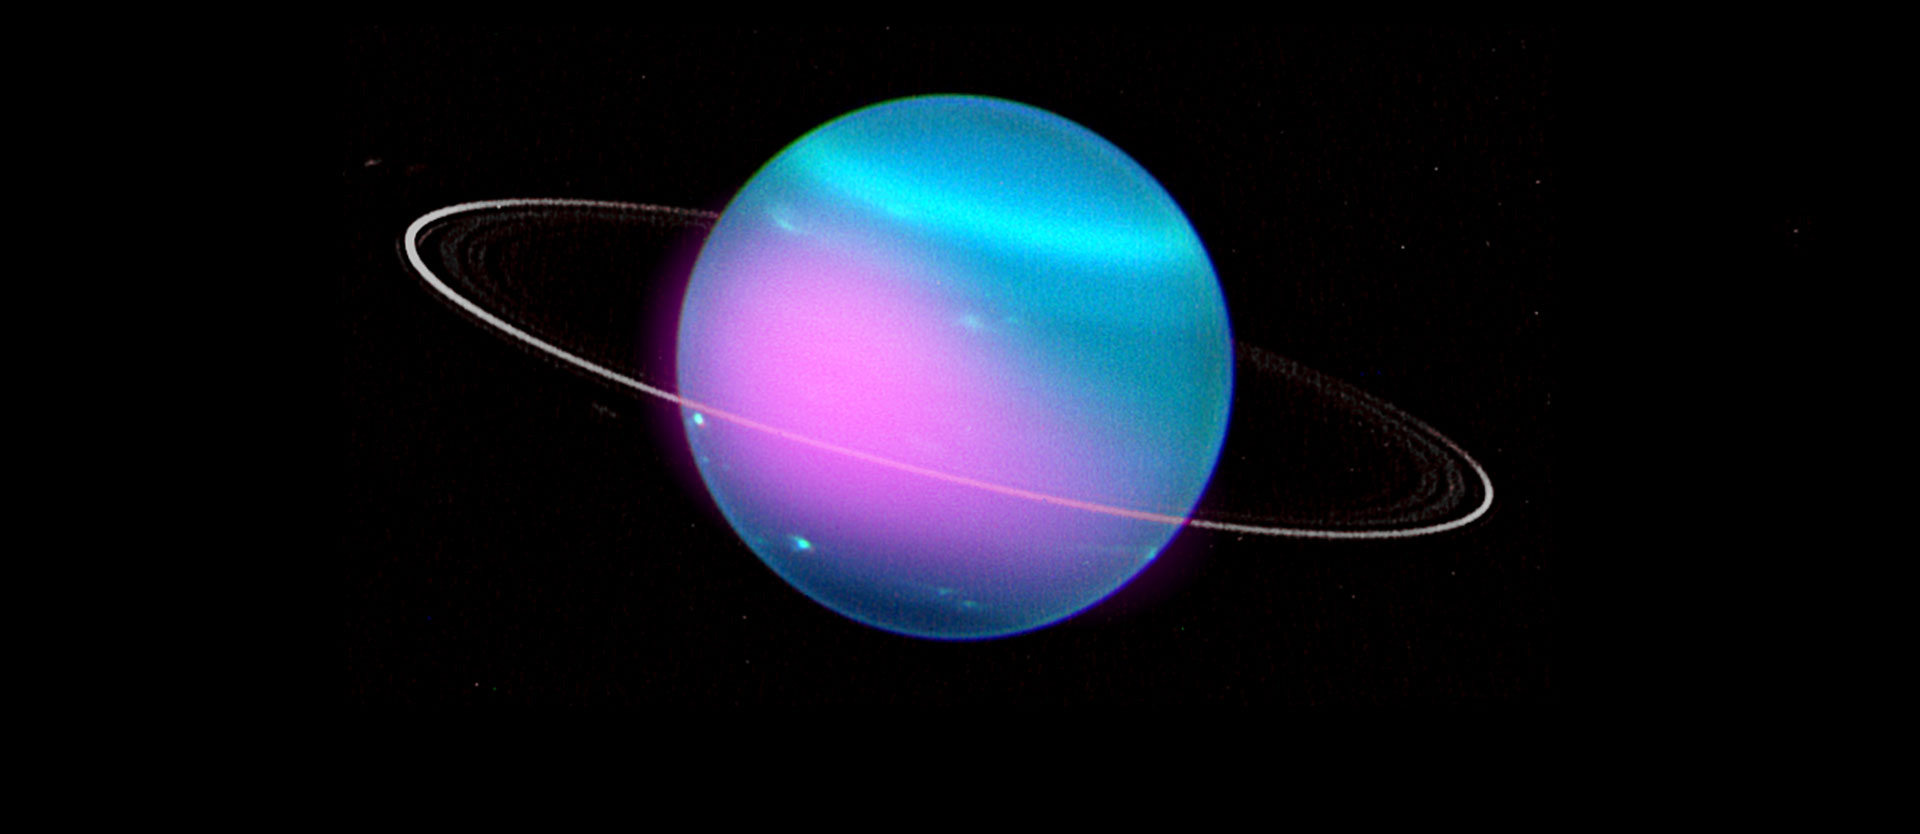 X-Ray light from Uranus